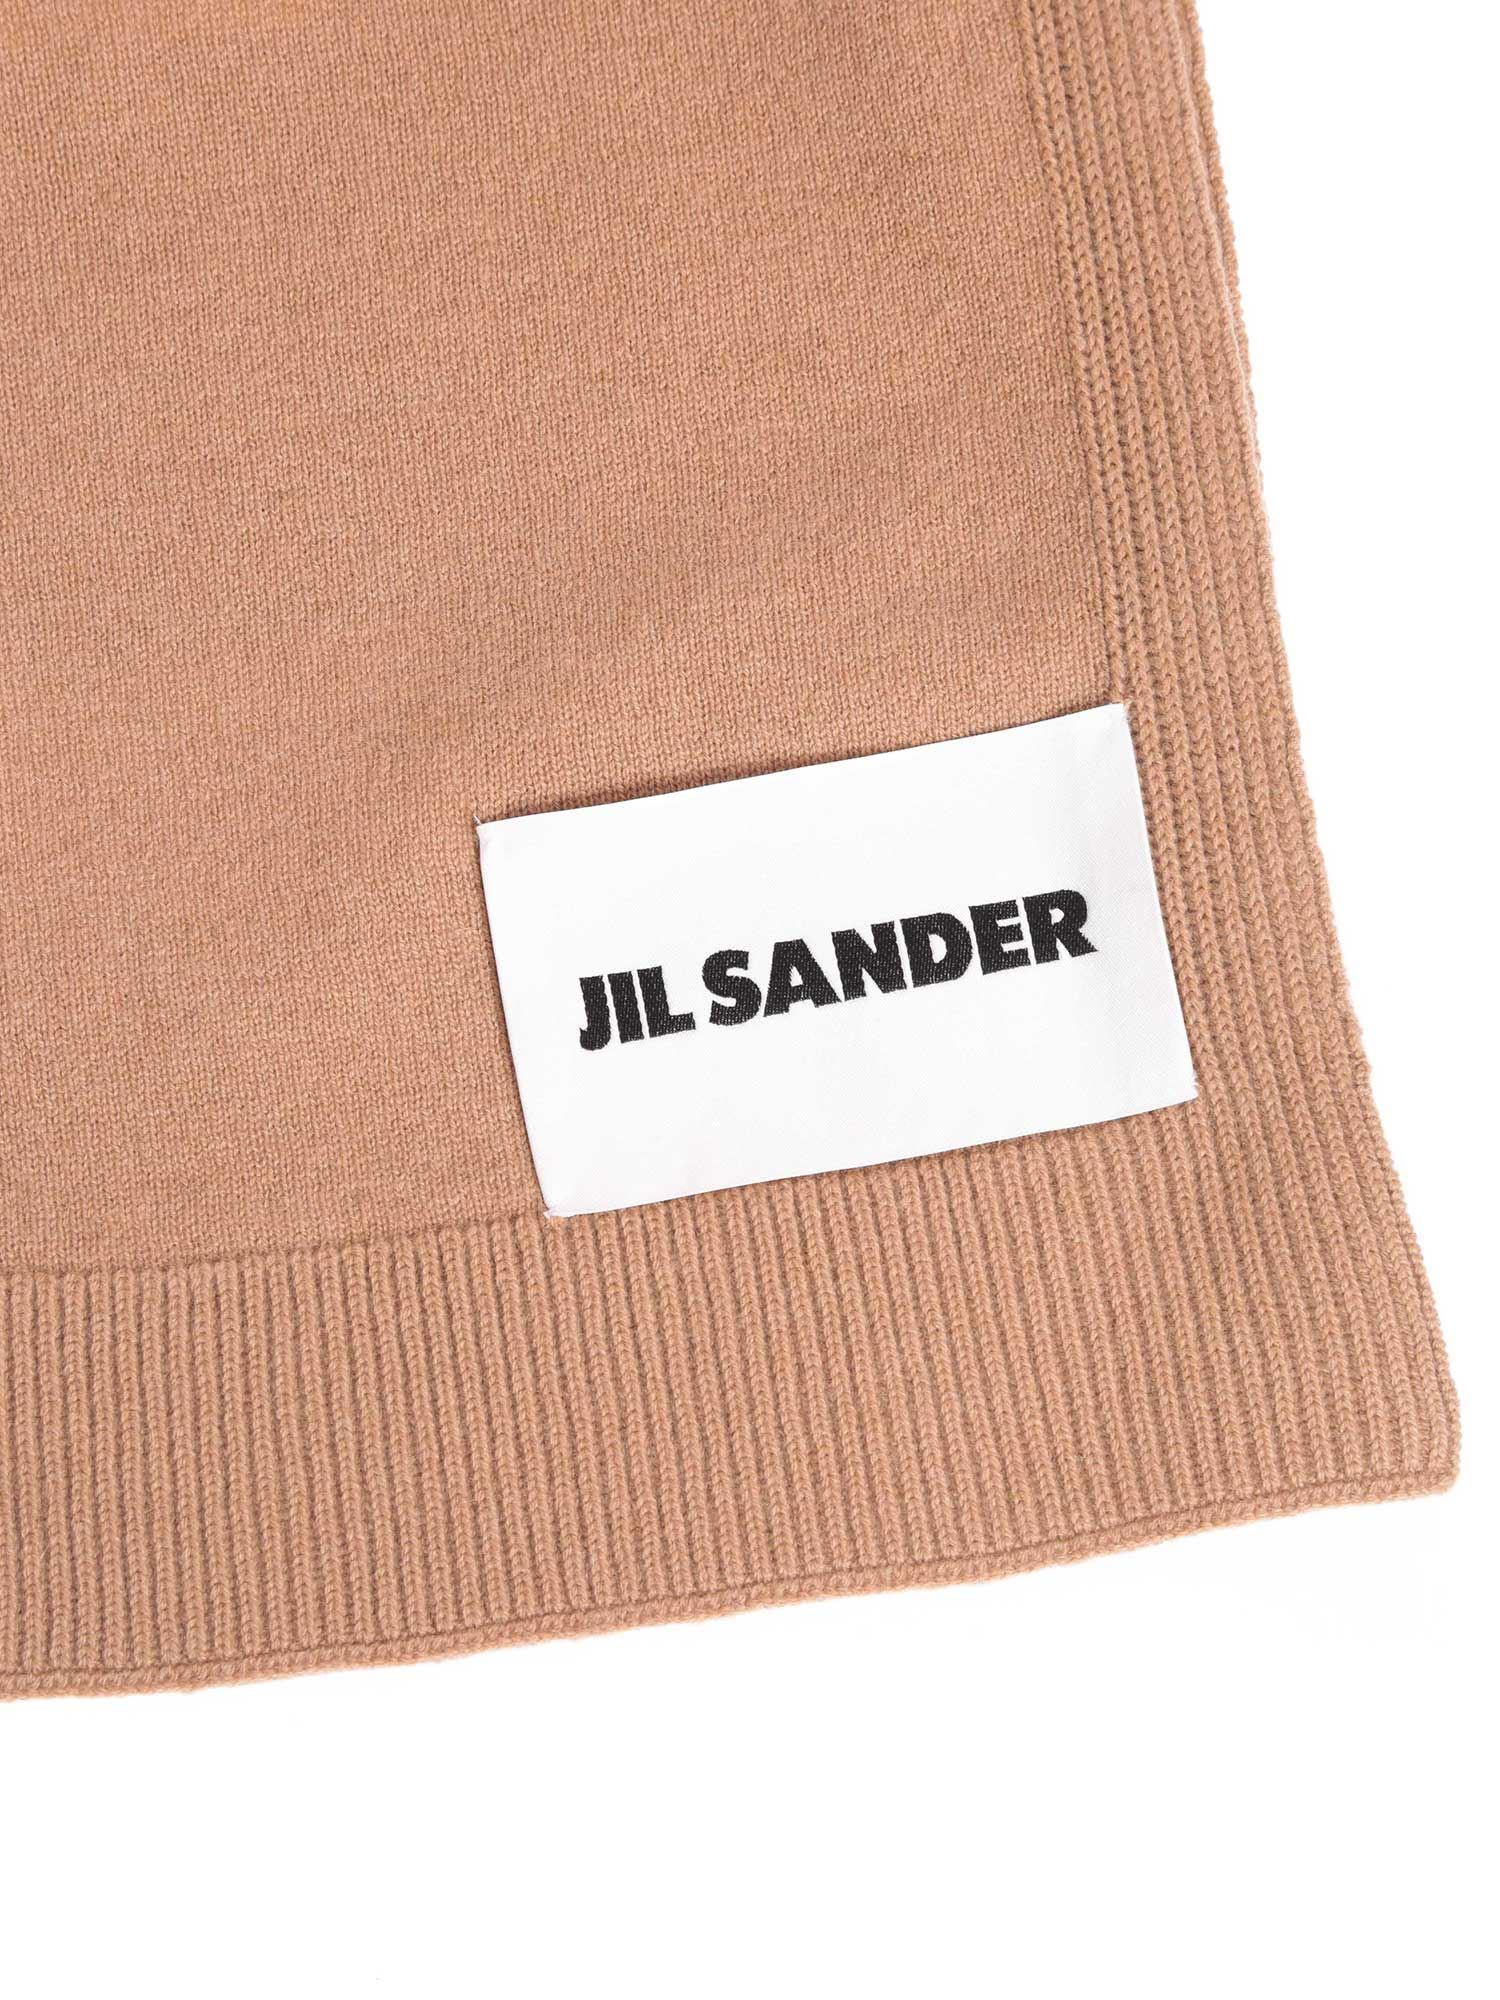 Jil Sander Cashmere Knitted Scarf for Men - Lyst